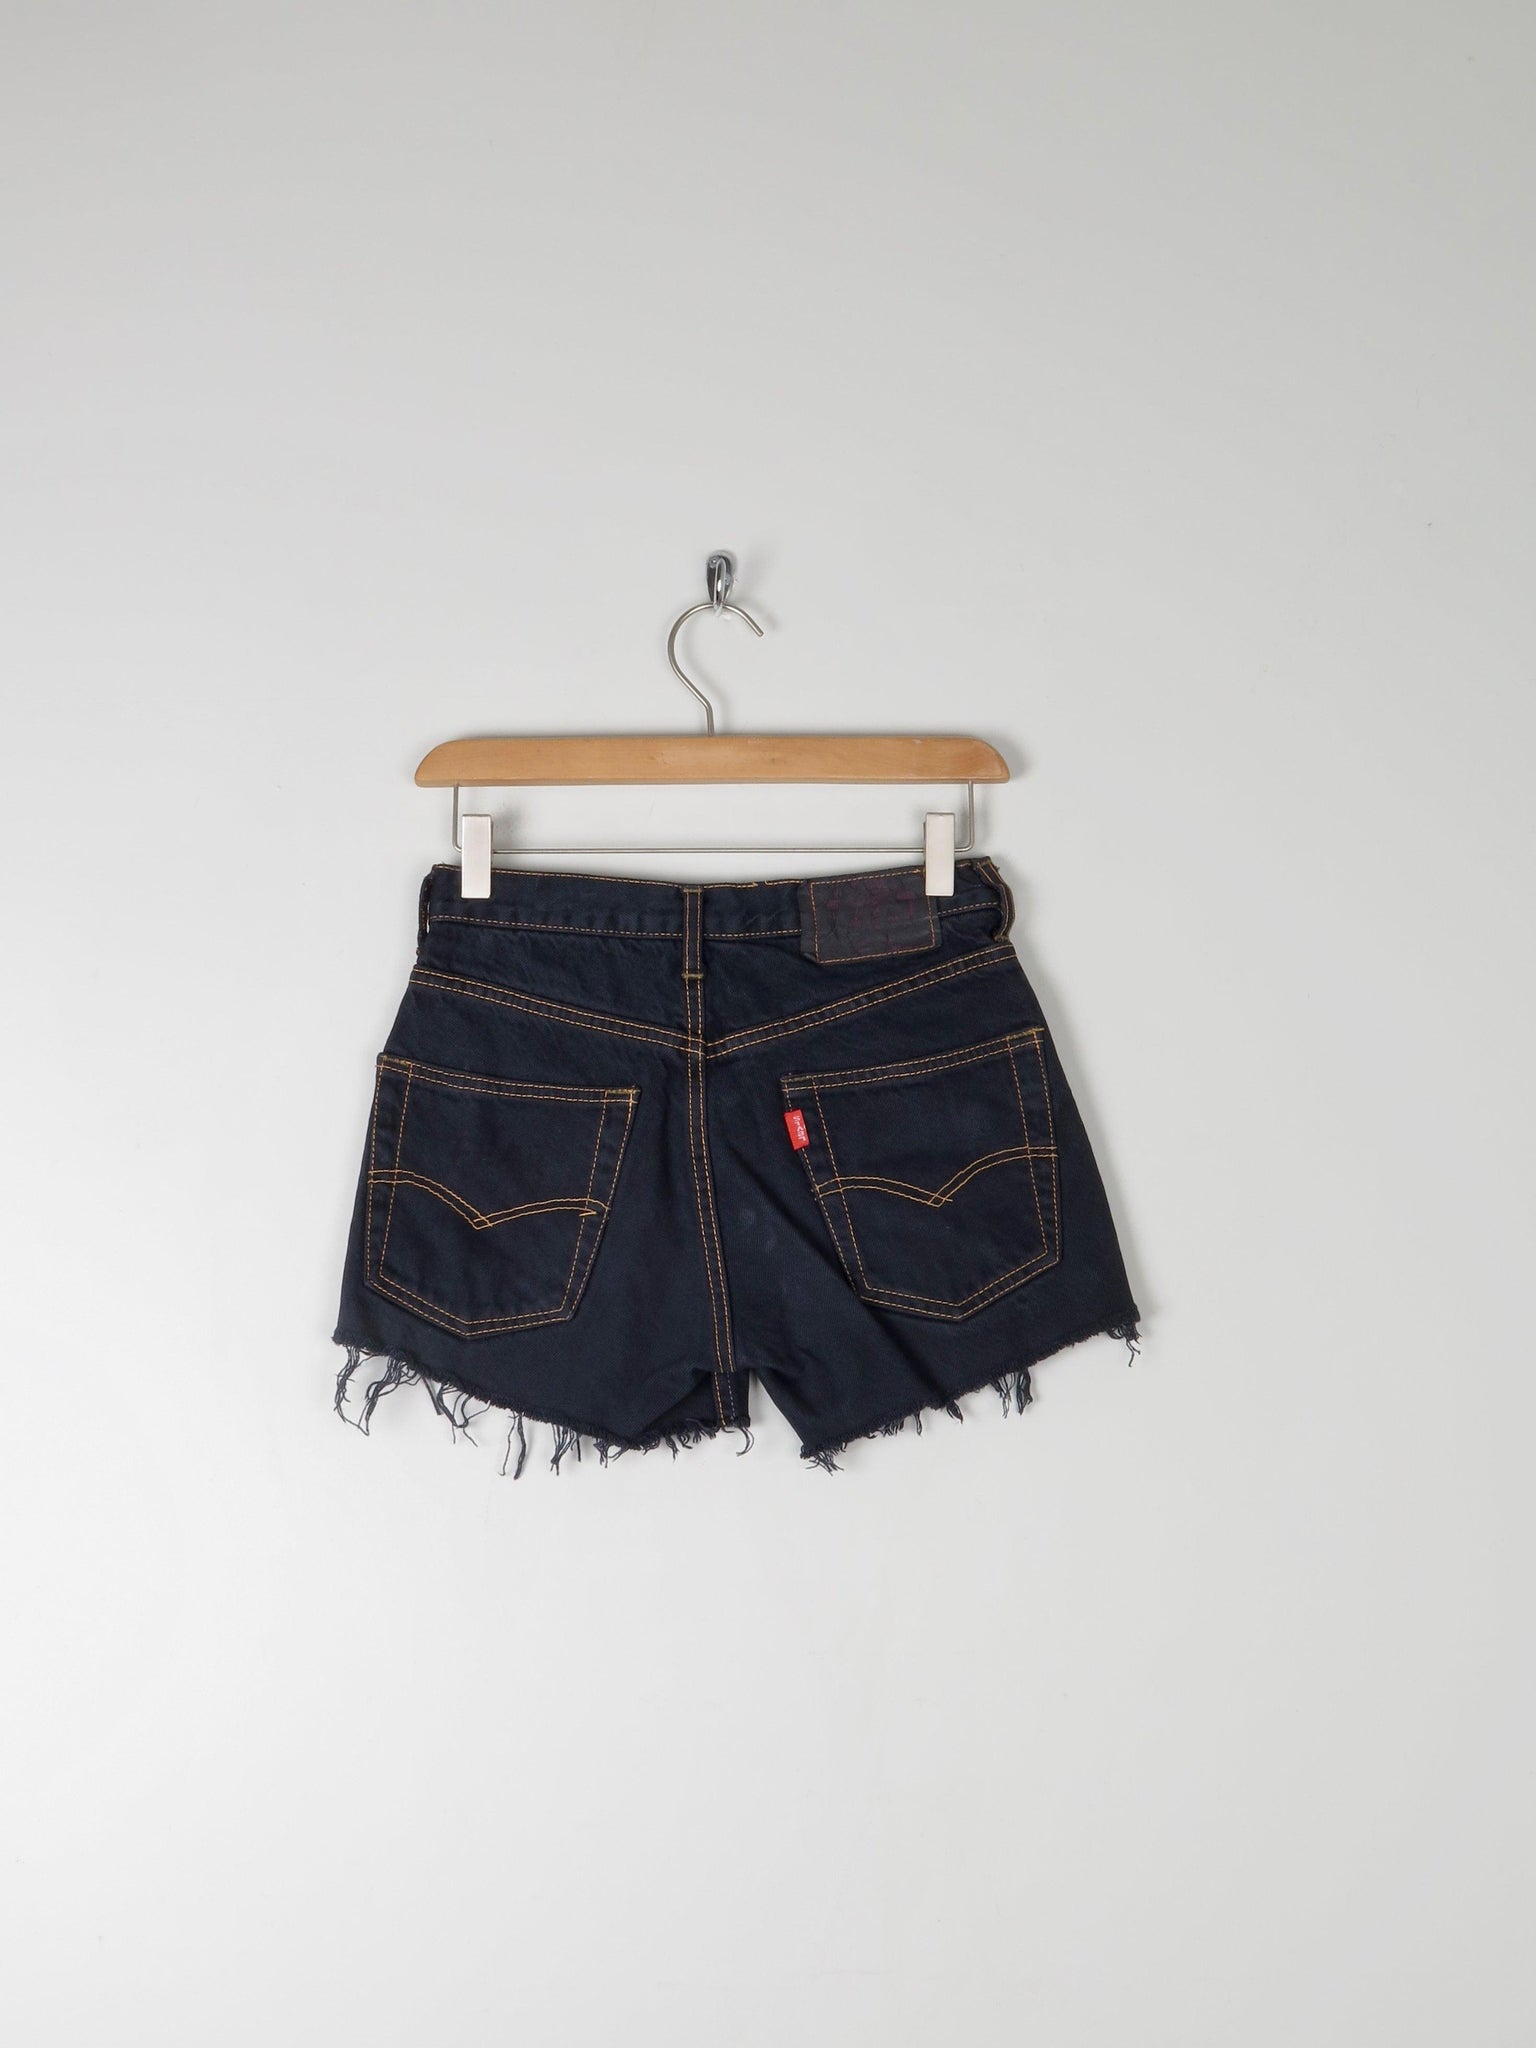 Levis Vintage Denim Shorts 26" 6 XS - The Harlequin